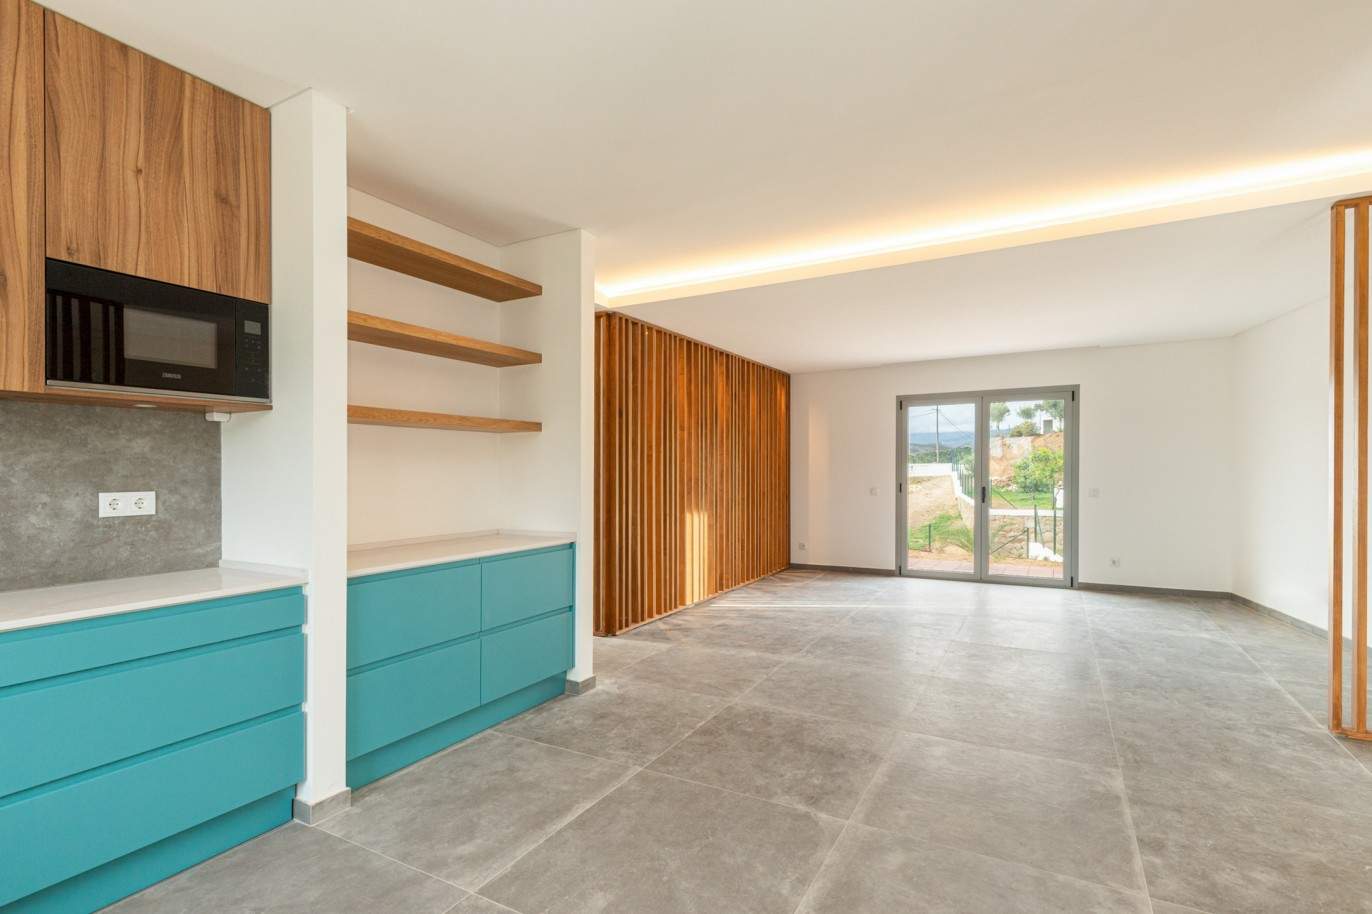 3 Bedroom Villa à vendre à Portimao, Algarve_211003